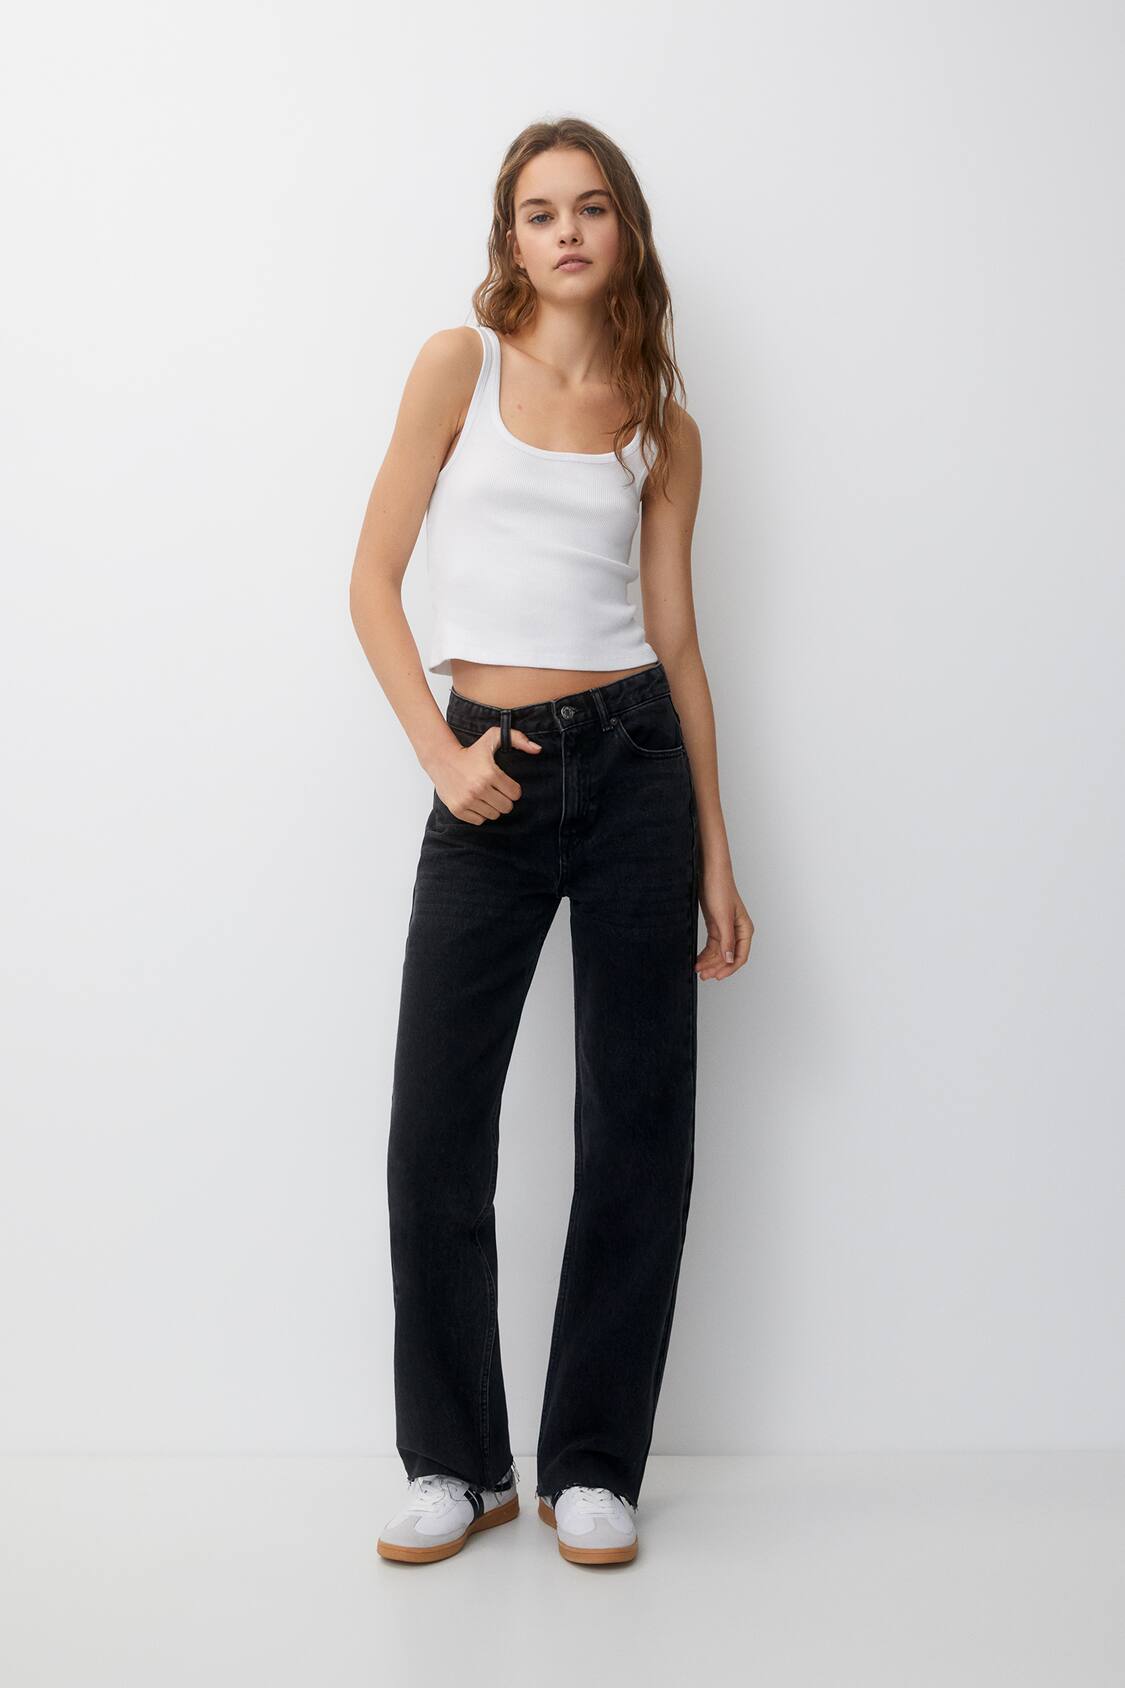  Jeans Pantalones rectos de baja altura para mujer